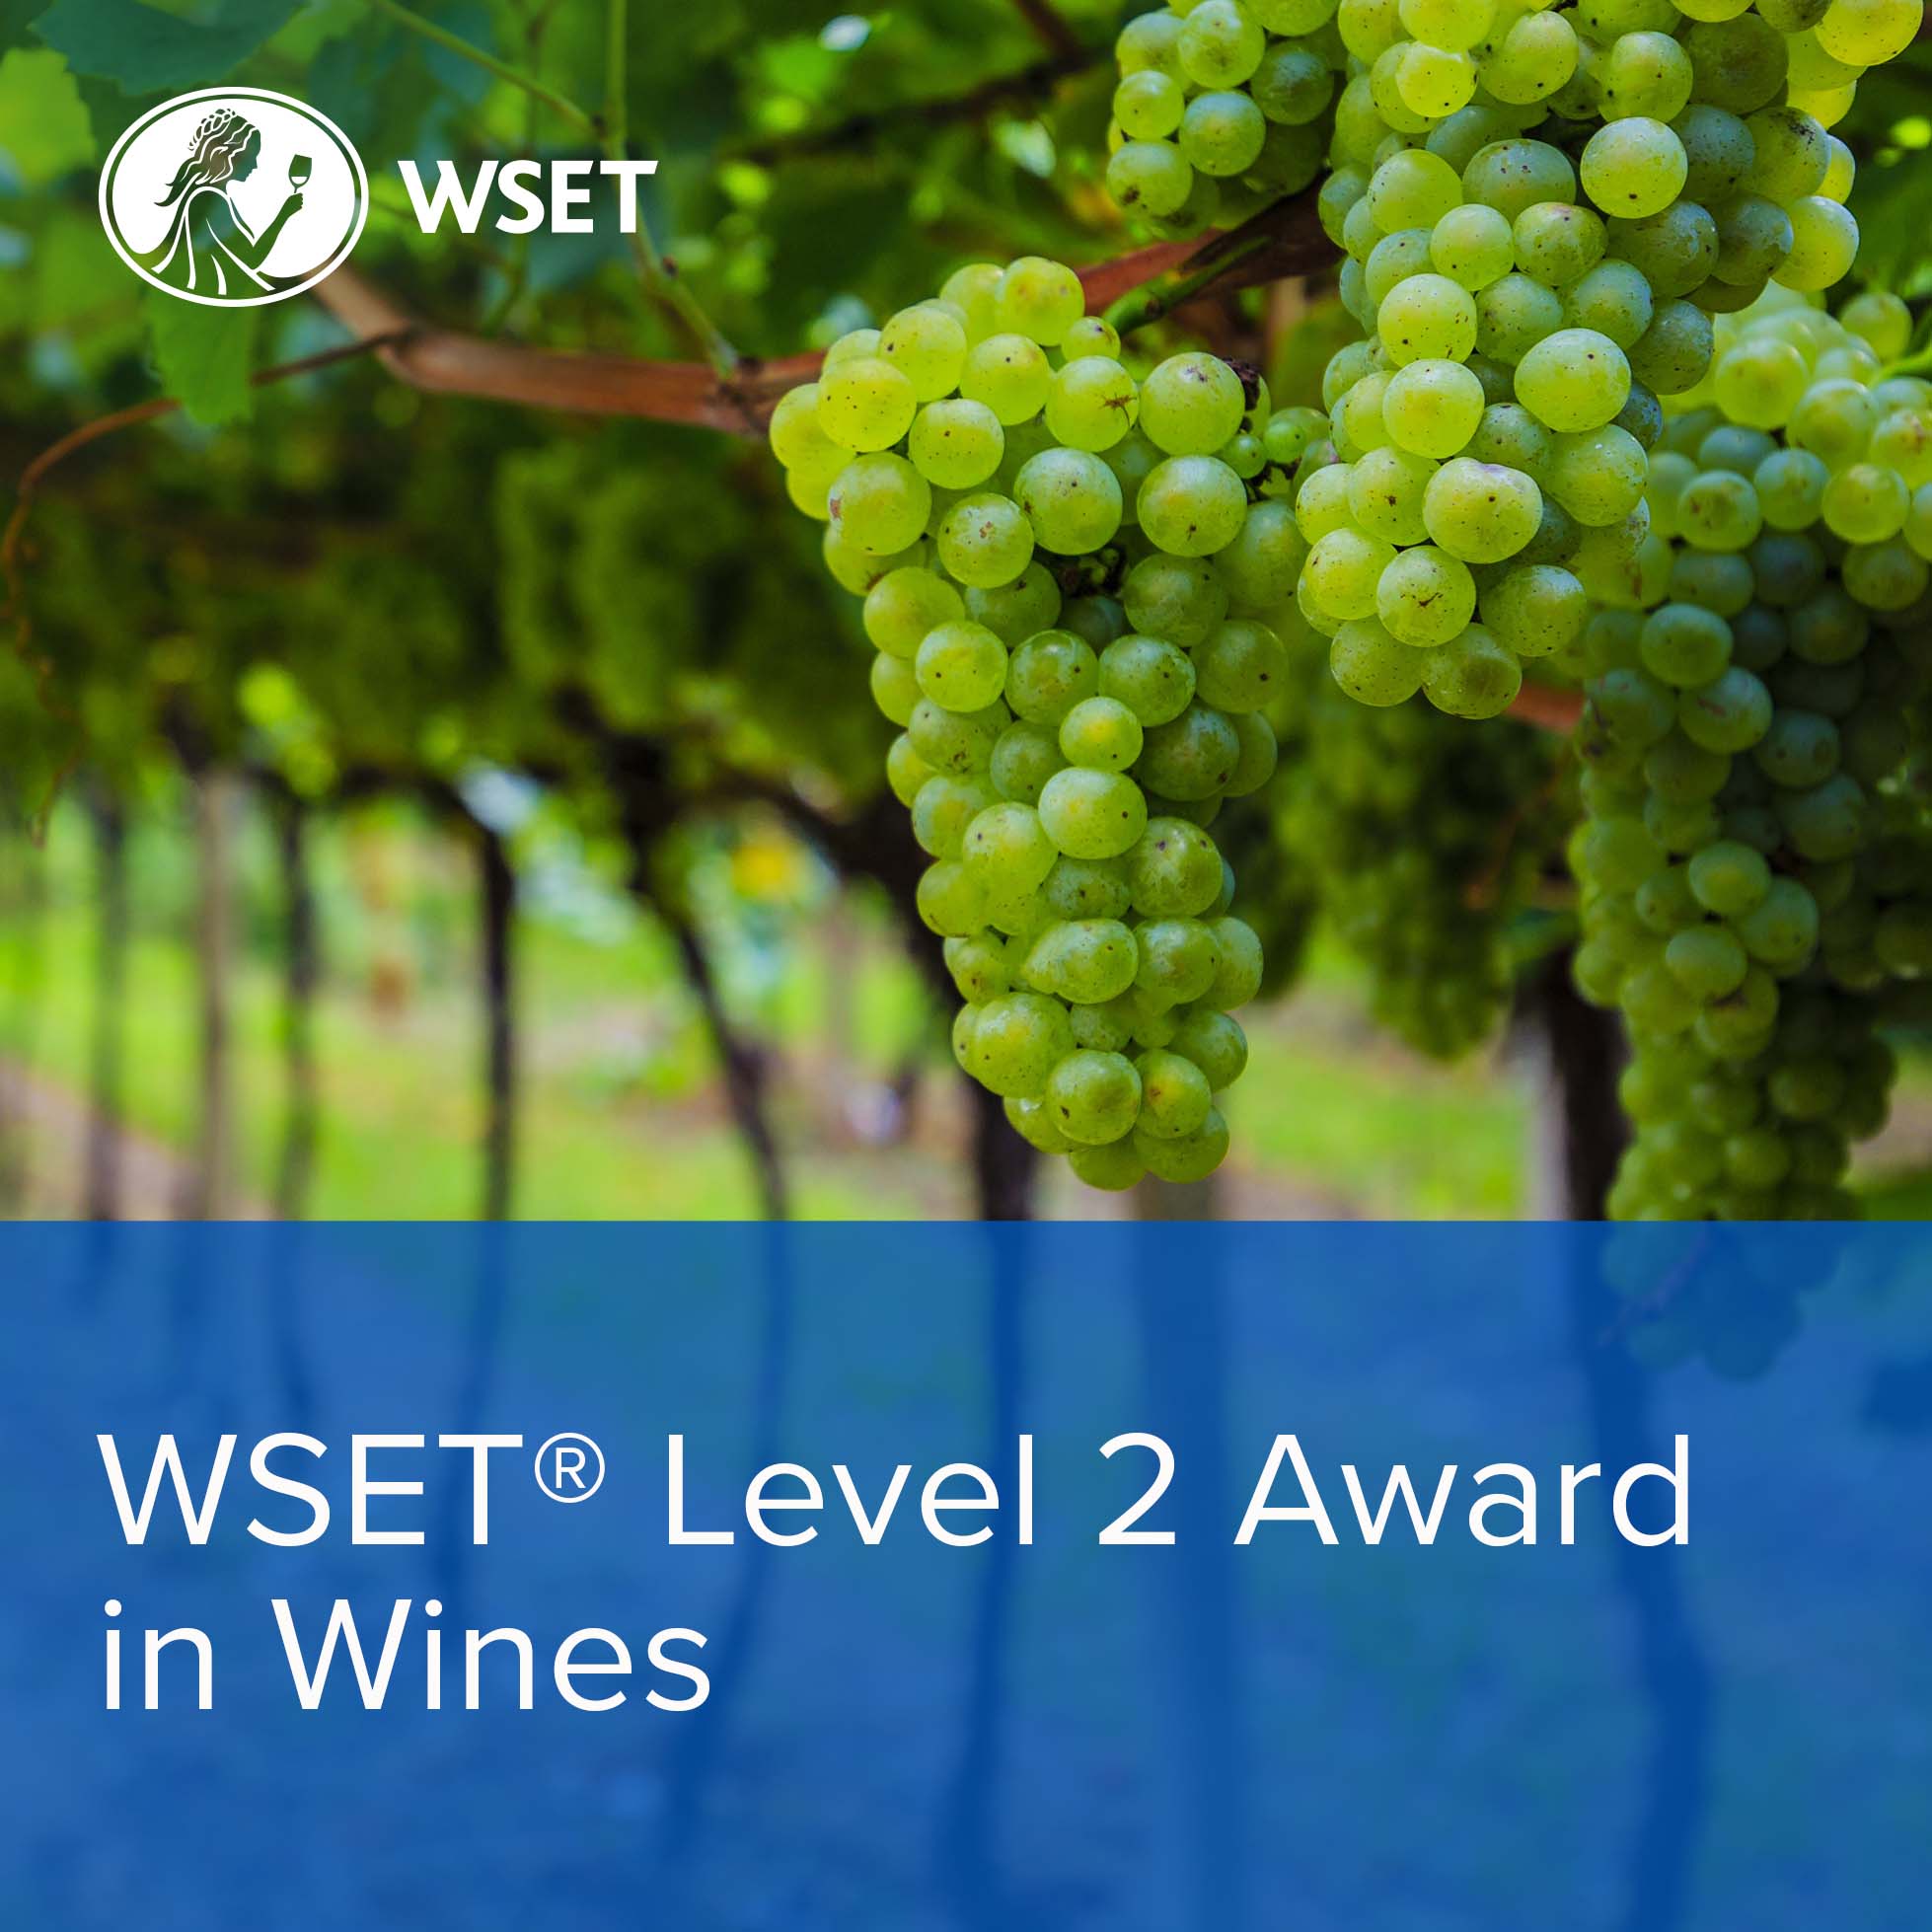 WSET Level 2 award in Wines